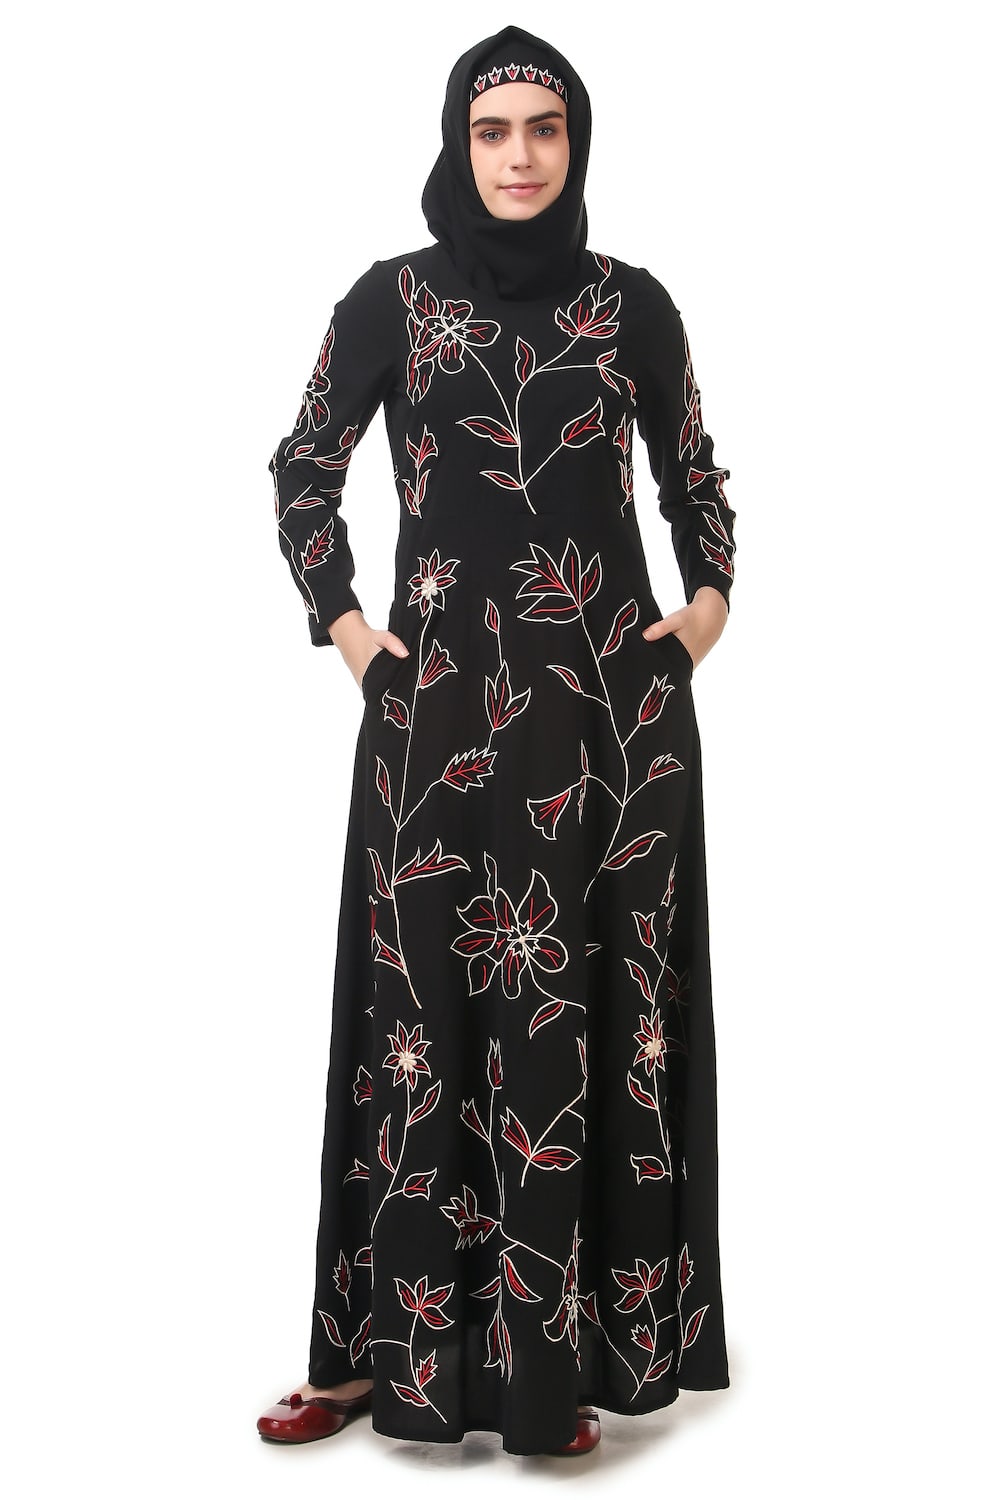 All Over Floral Embroidered Semi Circular Abaya